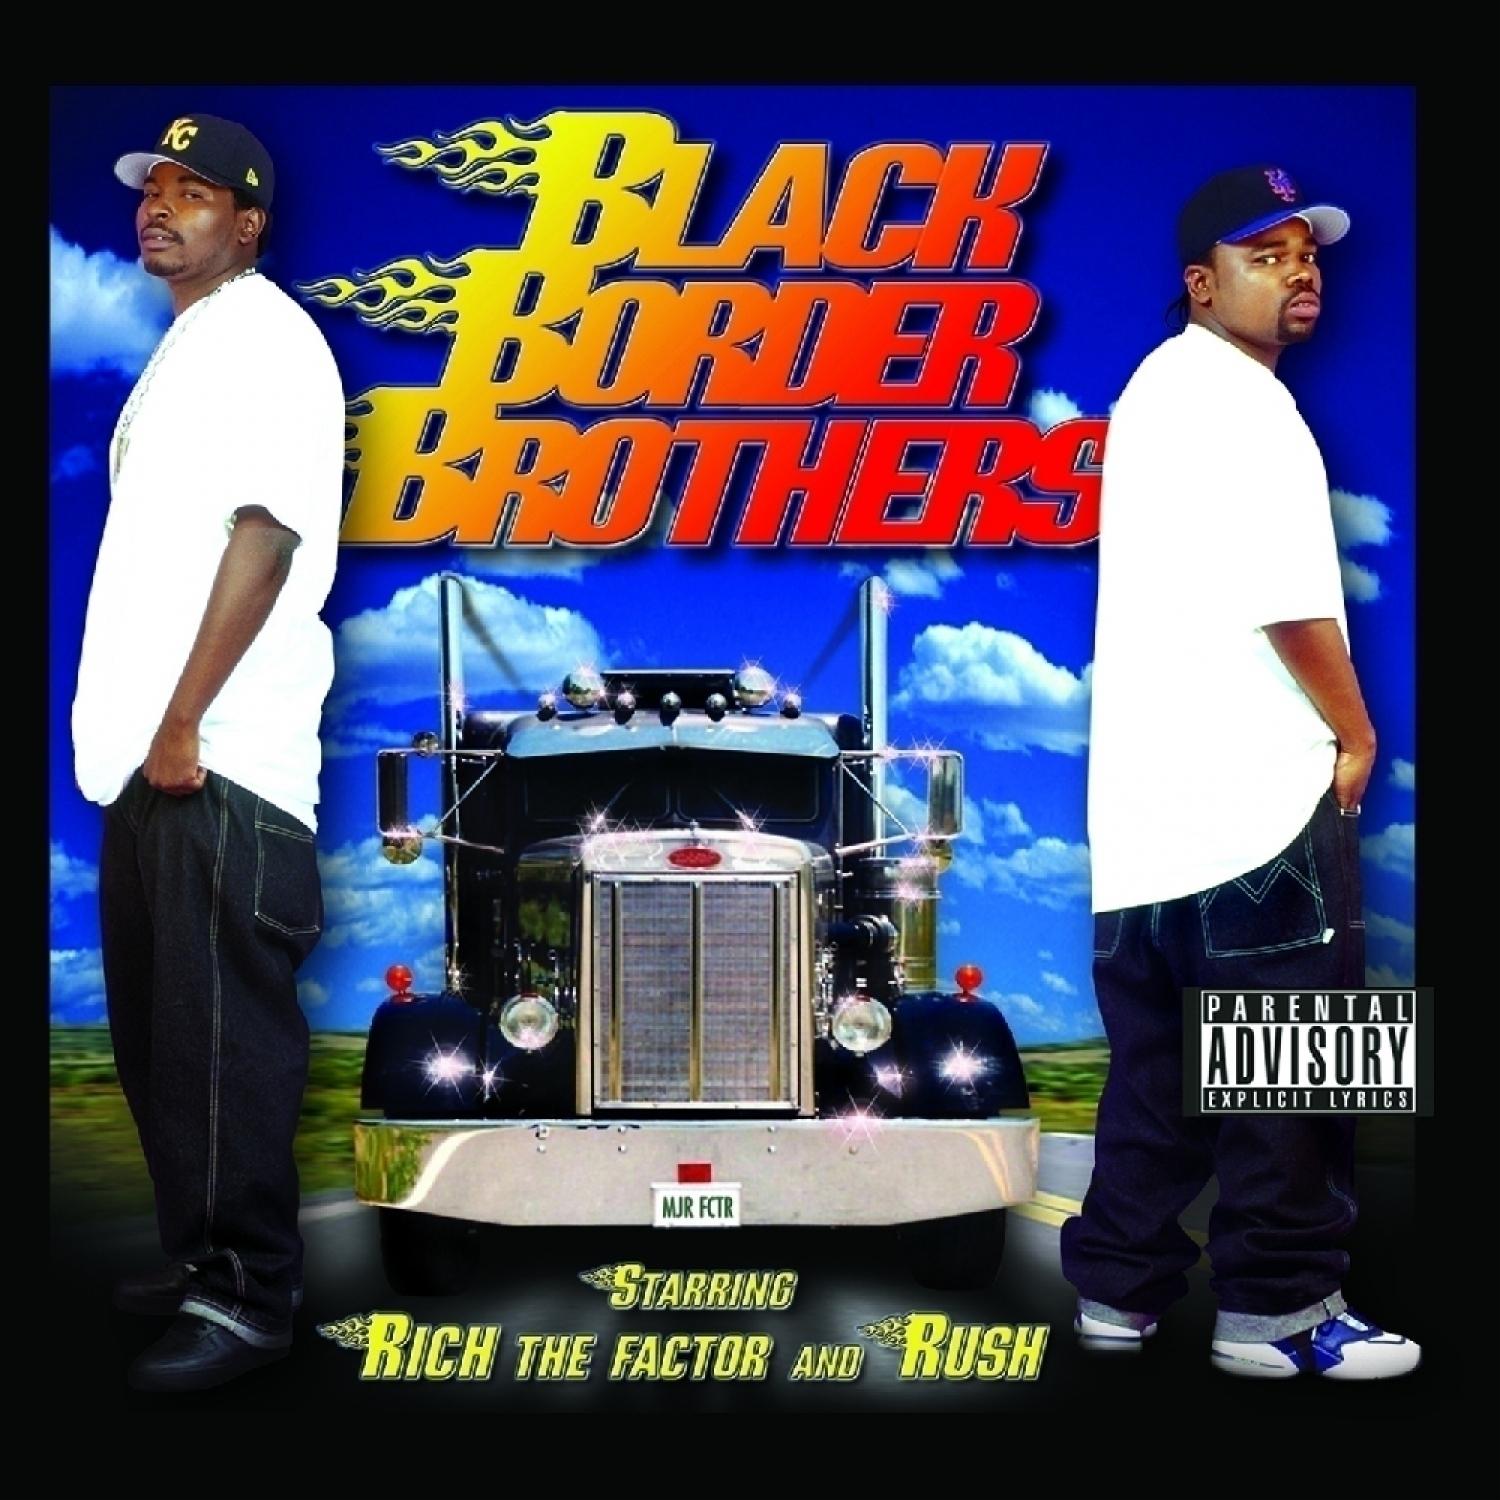 Black Border Brothers